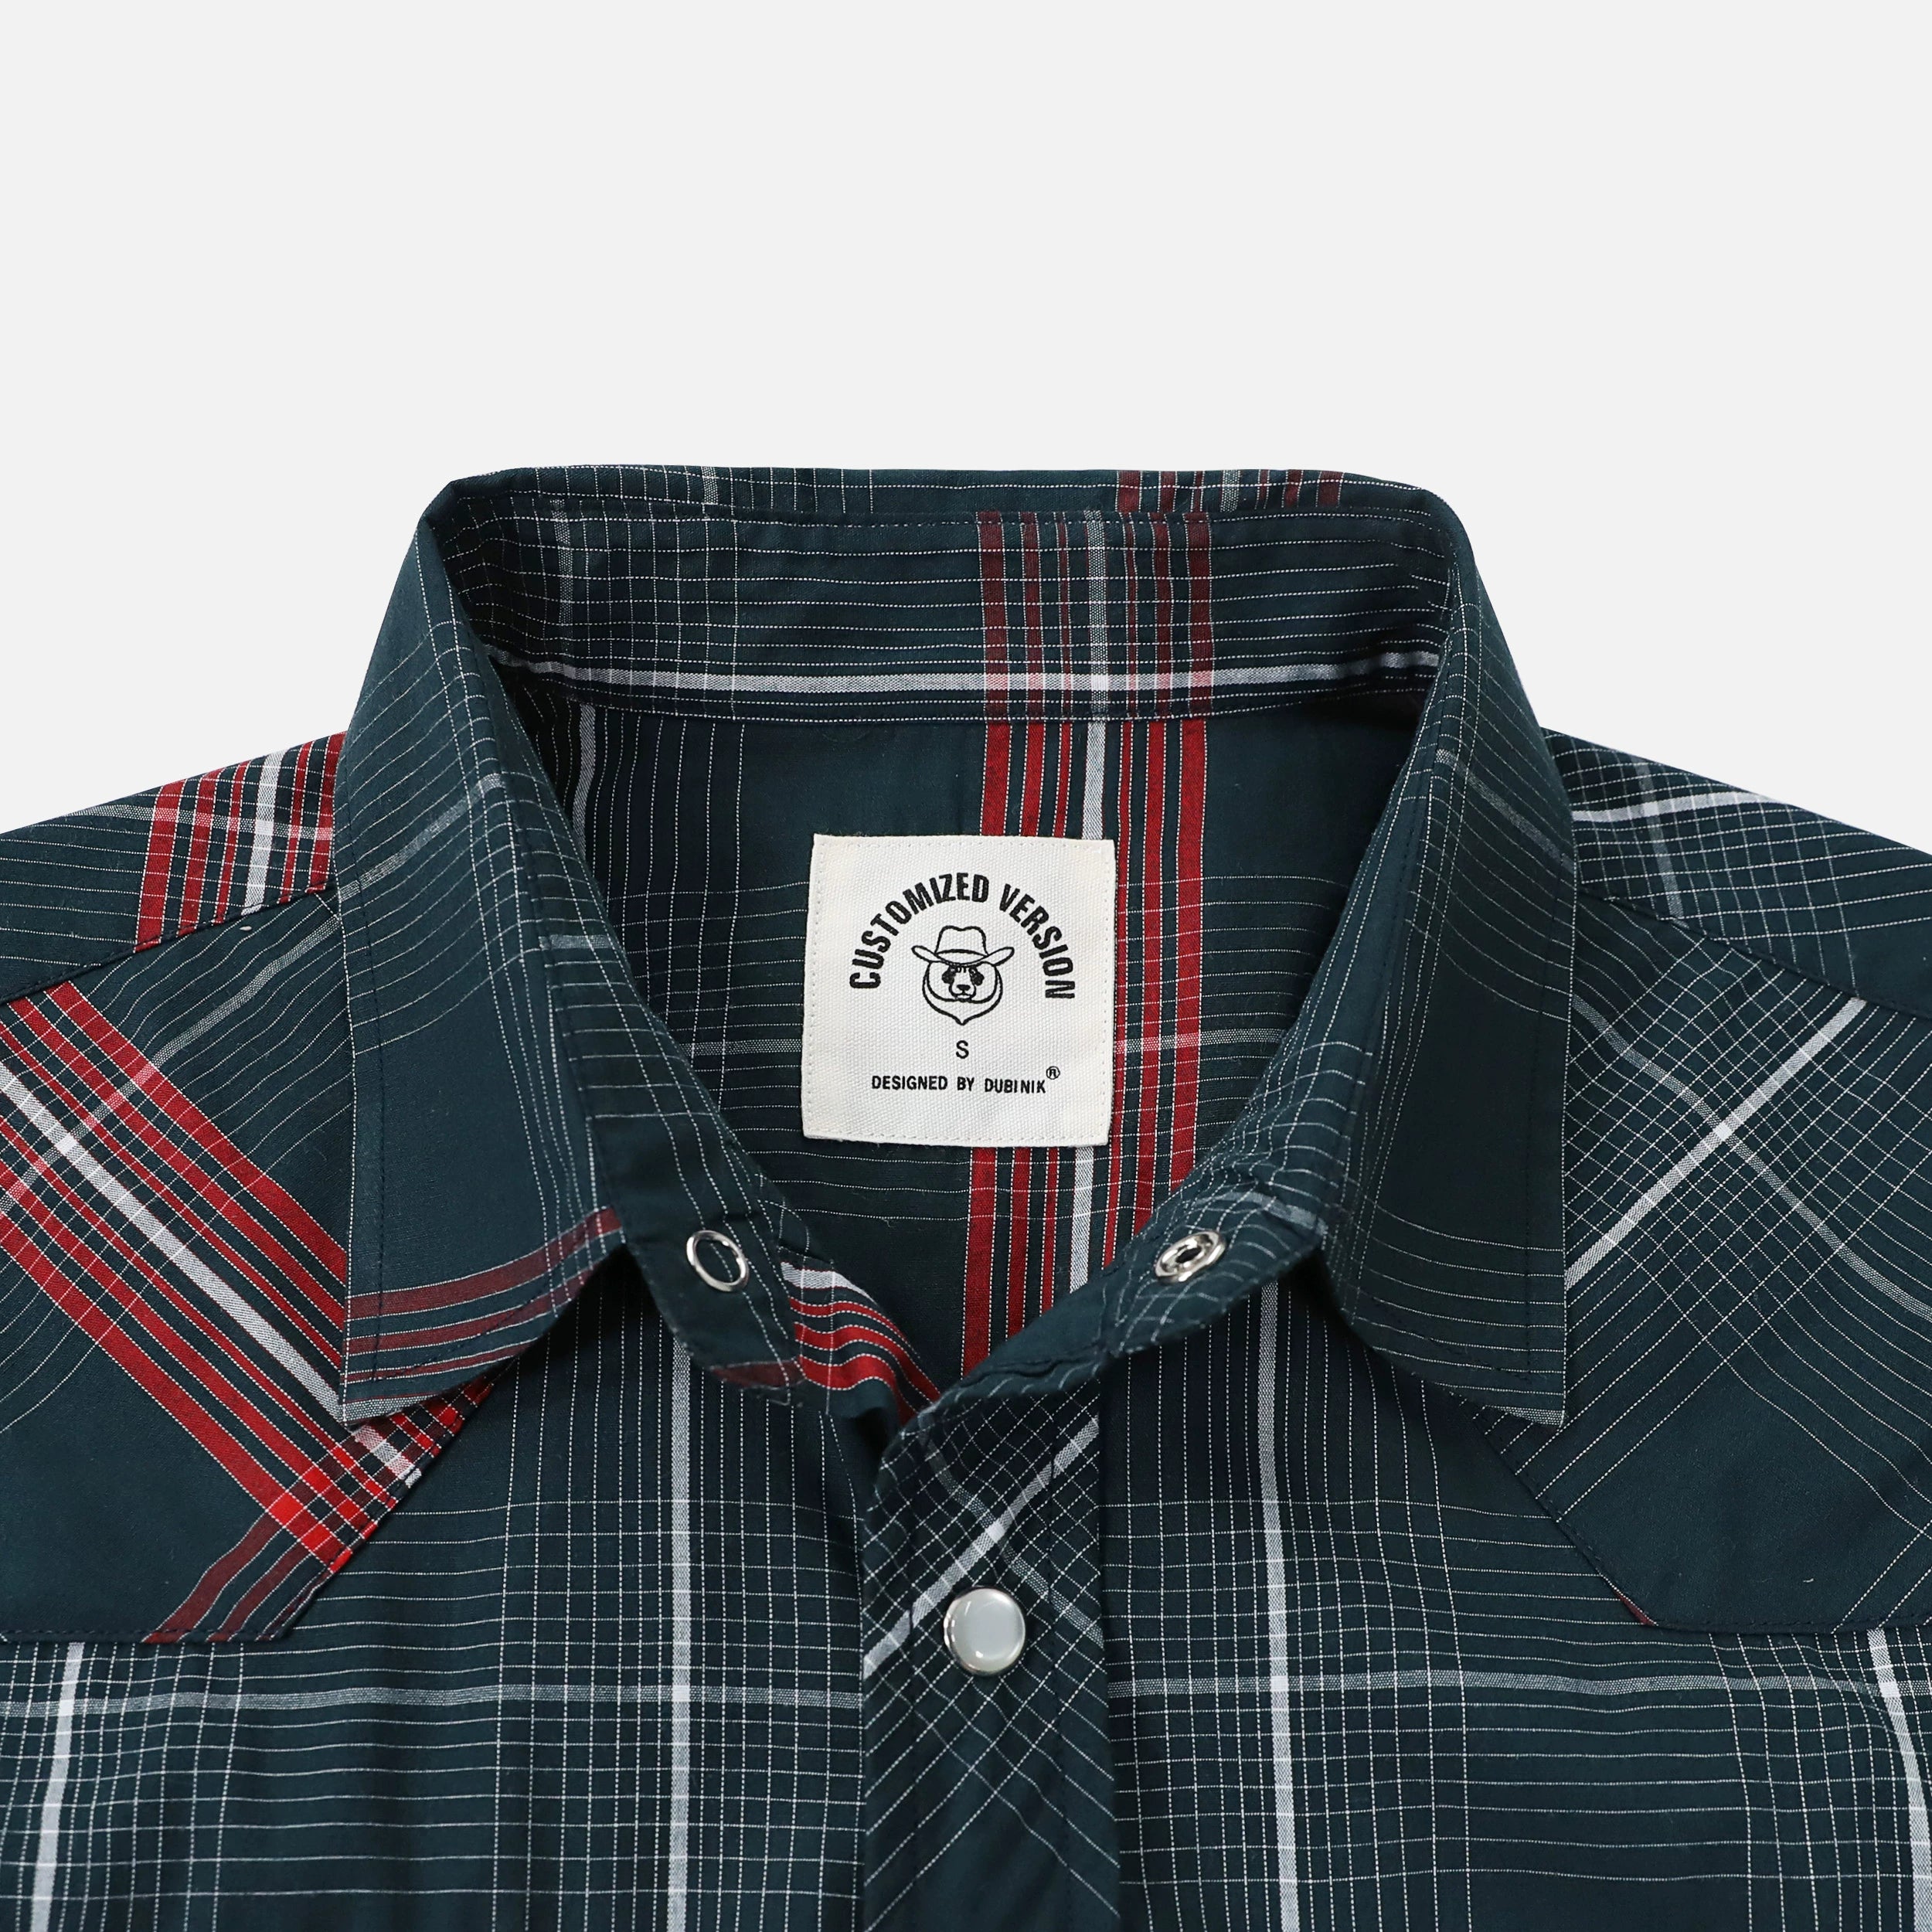 Dubinik® Western Shirts for Men Short Sleeve Plaid Pearl Snap Shirts for Men Button Up Shirt Cowboy Casual Work Shirt#41030